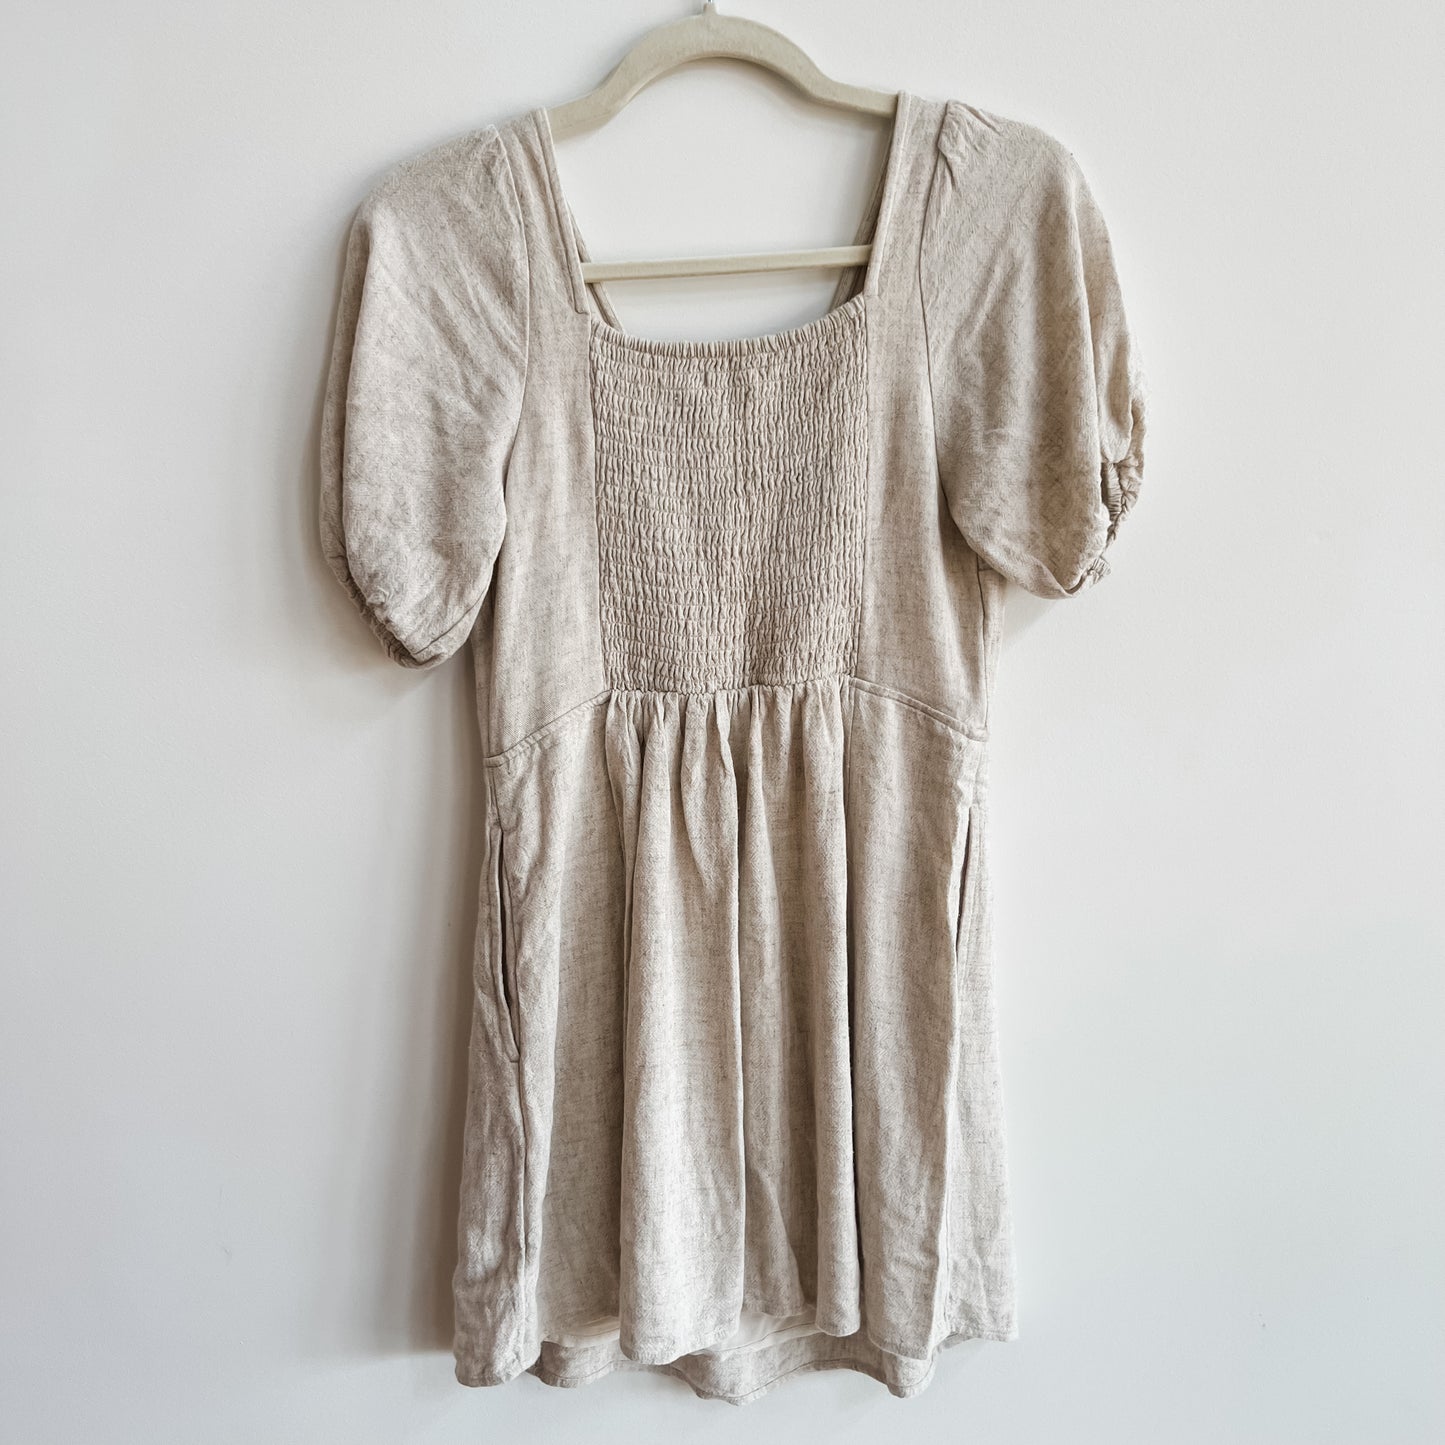 Abercrombie & Fitch Linen Dress (XS)